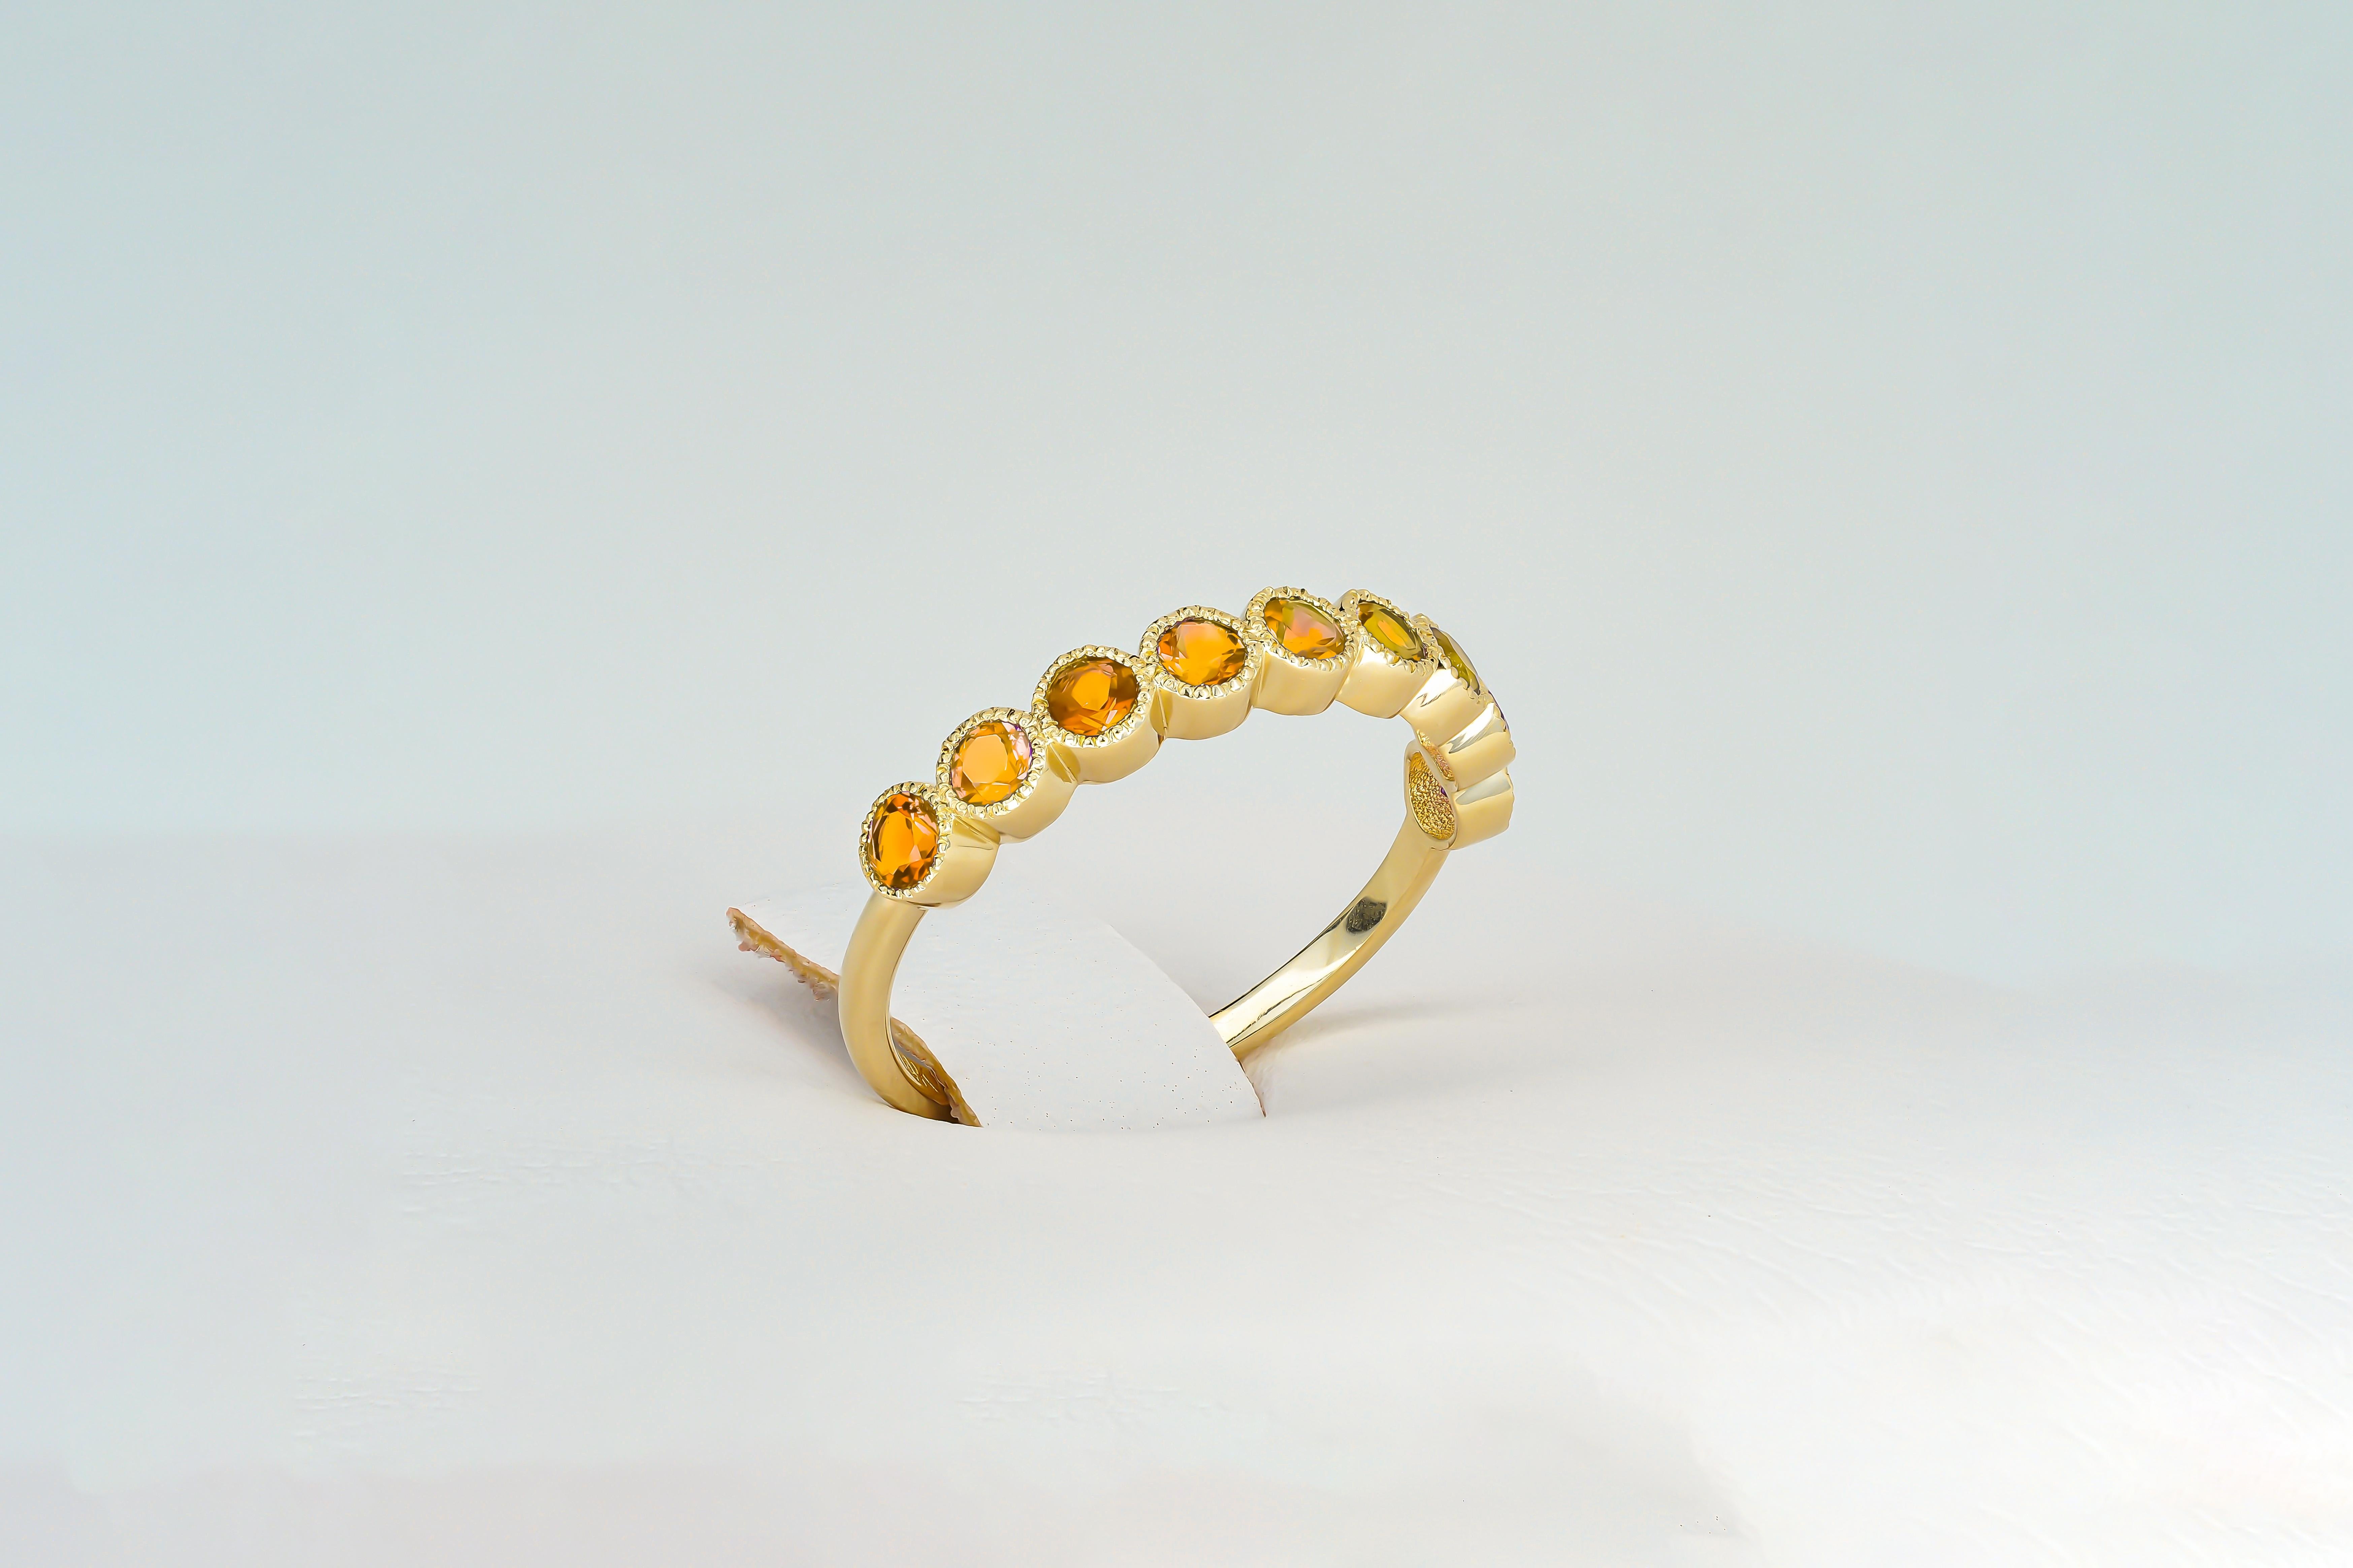 Orange gem half eternity 14k gold ring.
Lab sapphire semi eternity ring. Round orange gemstone gold ring. 2.5 mm lab orange sapphire ring.

Metal: 14k gold
Weight: 1.8 gr depends from size

Gemstones:
Lab sapphires, orange color, round cut, 2.5 mm